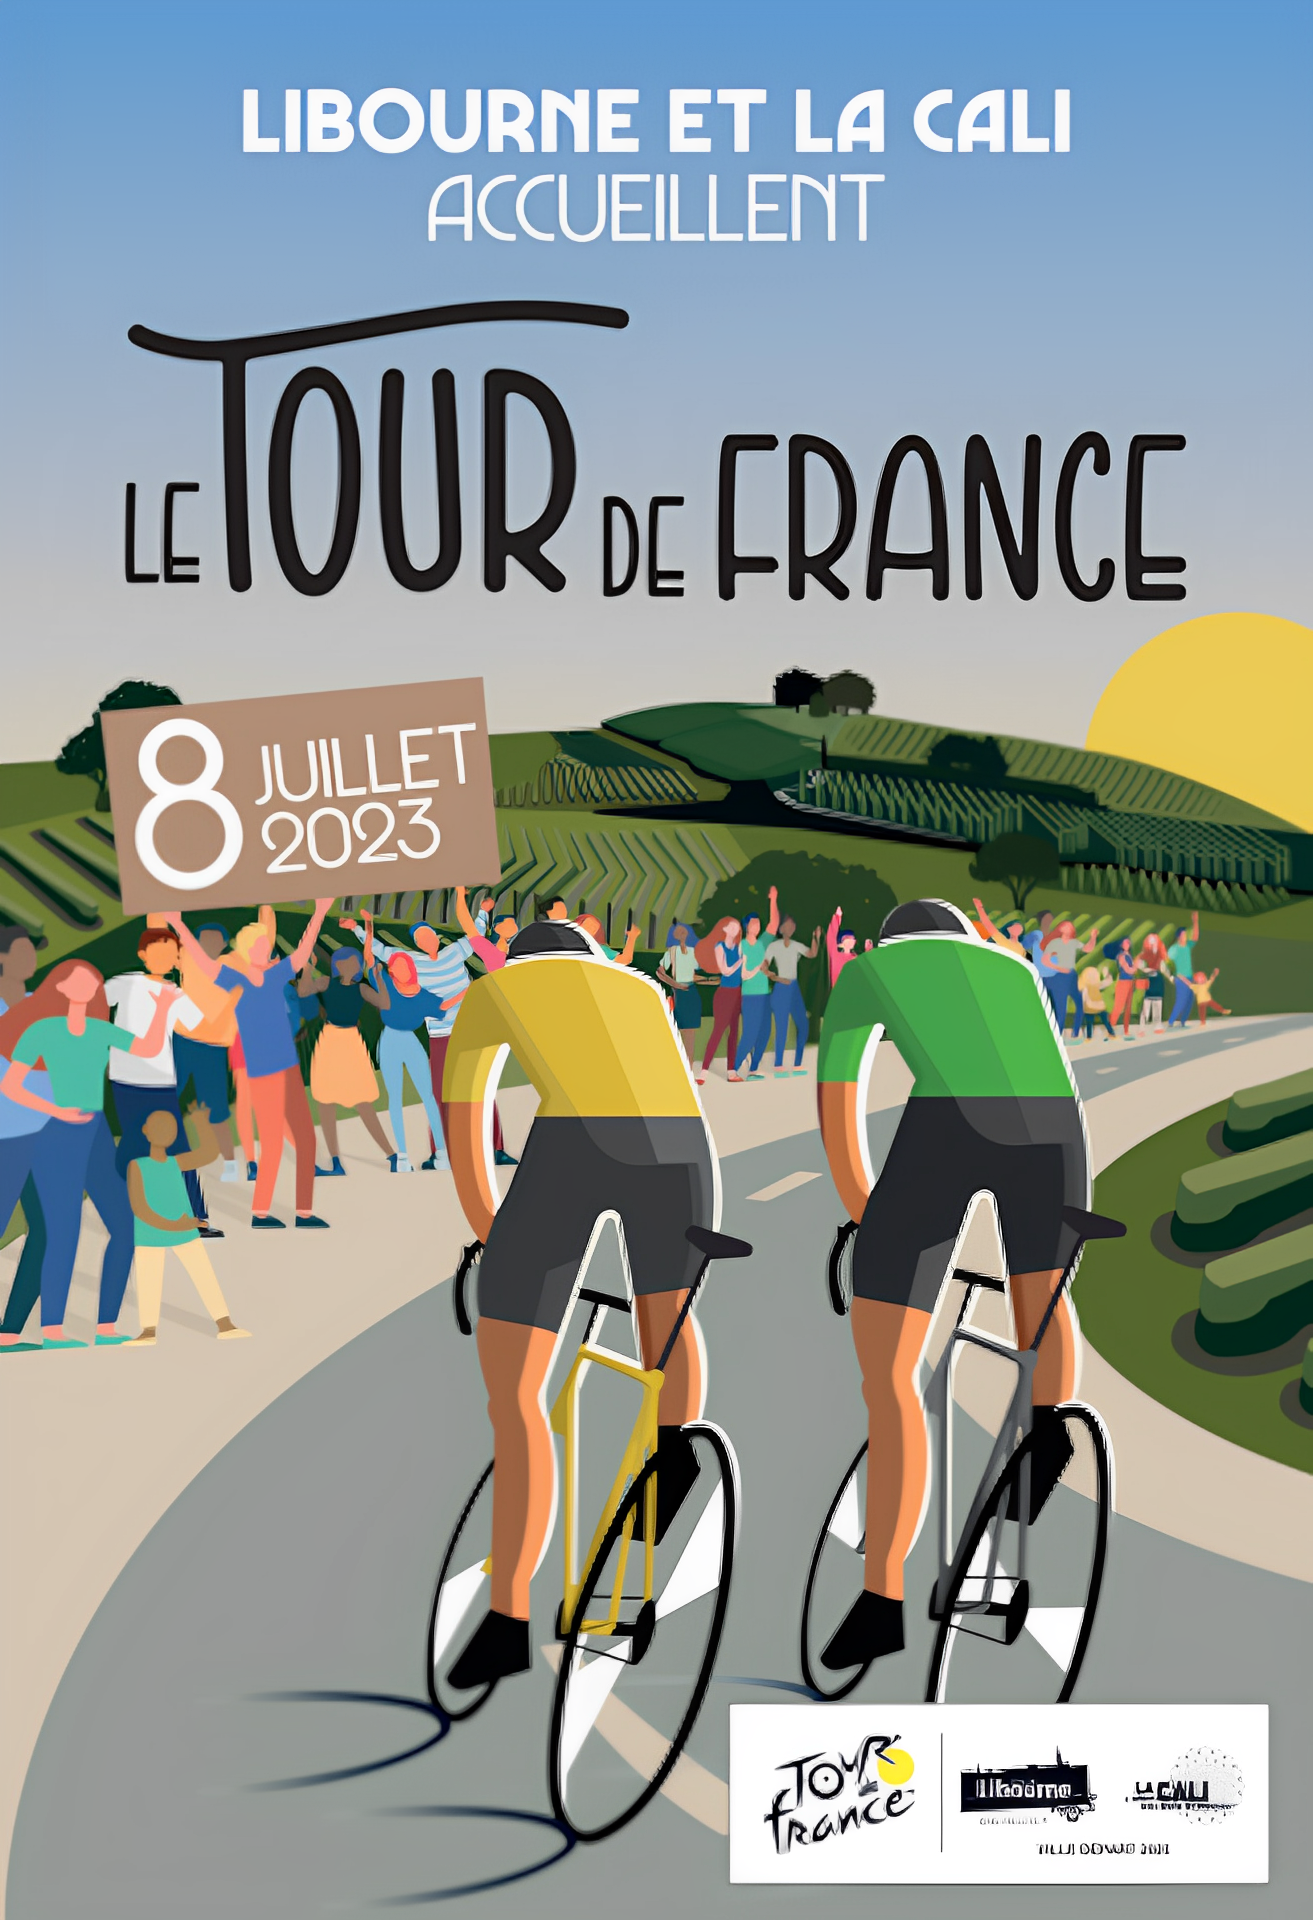 Libourne accueille le Tour de France - 2023 - Libournavelo-V3